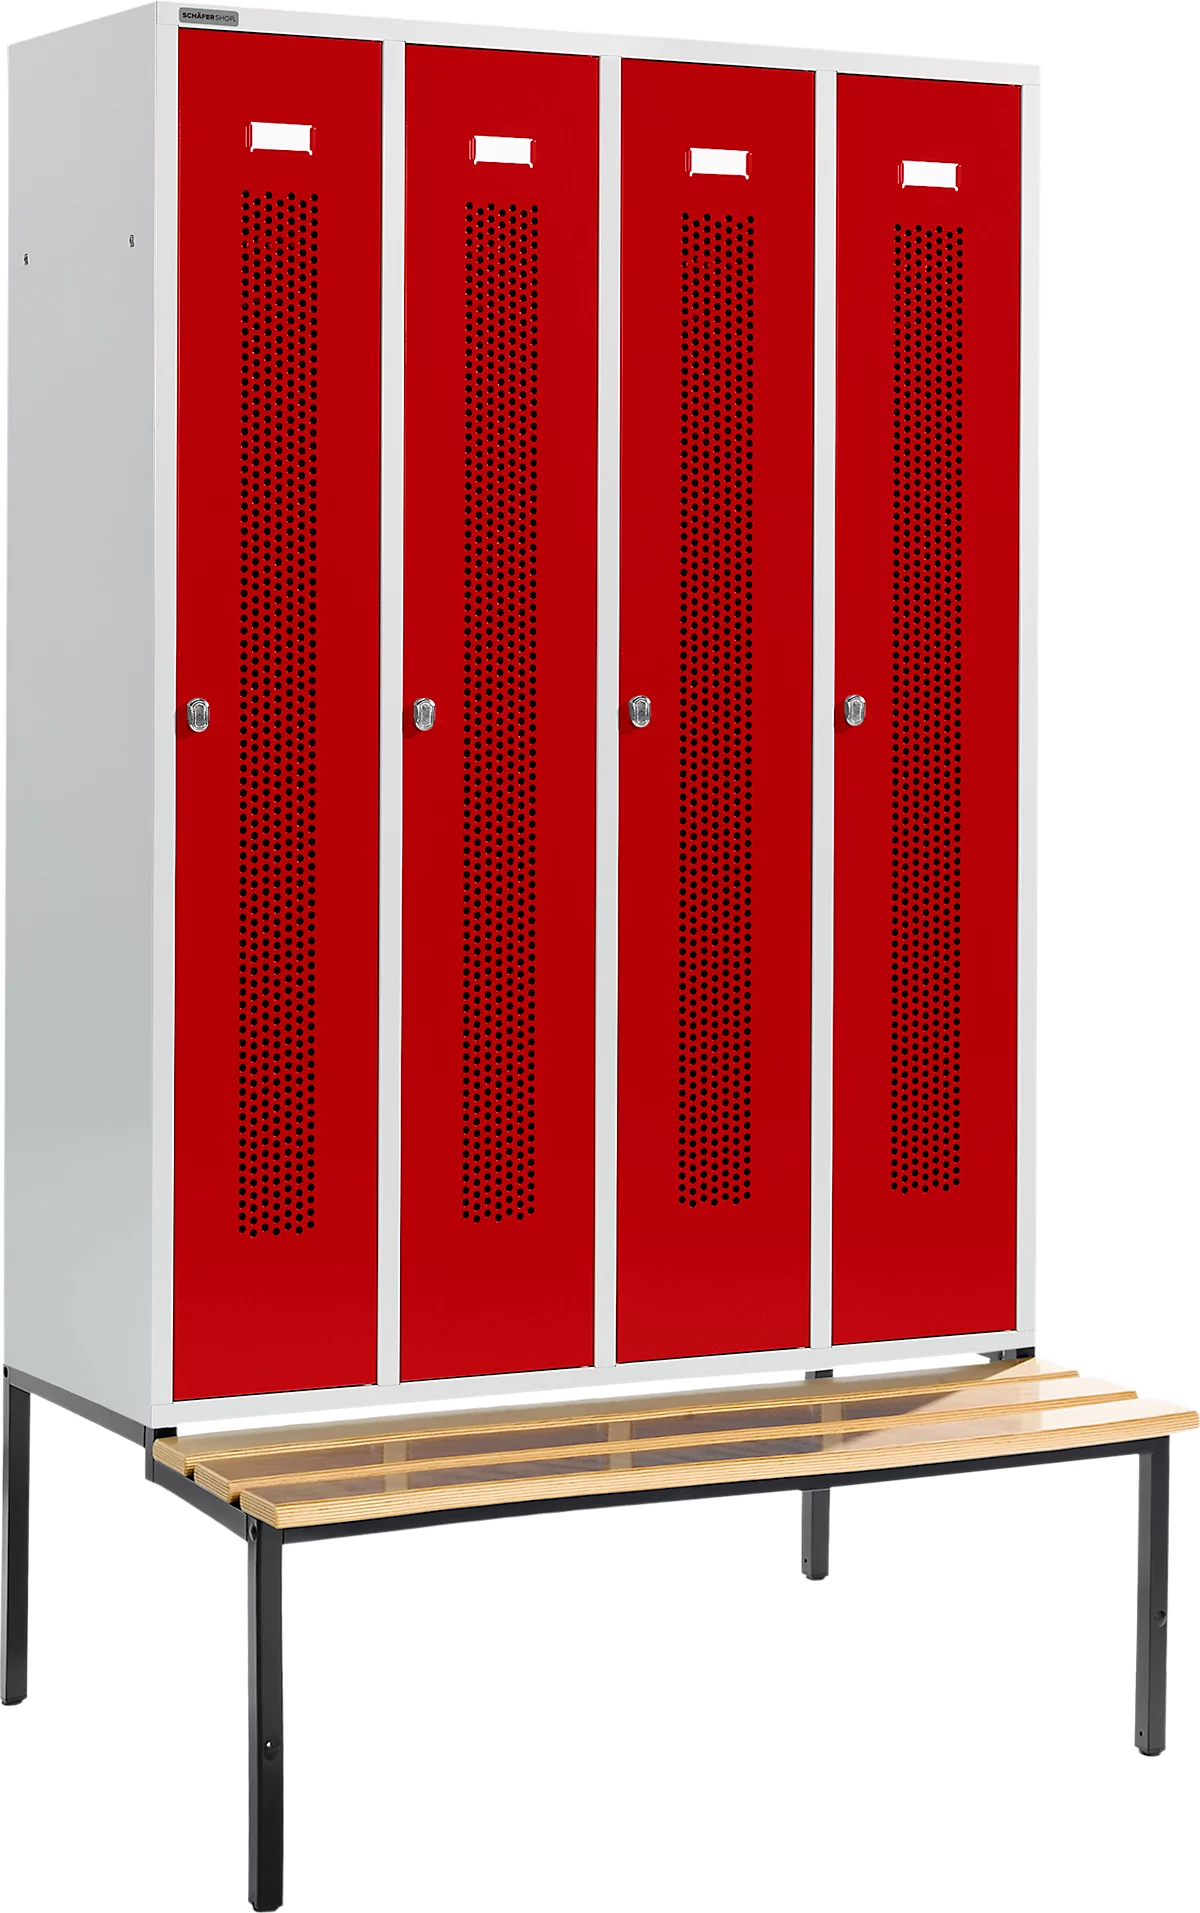 Schäfer Shop Select armario ropero, con banco, 4 compartimentos, 300 mm, cerradura de pestillo giratorio, puerta rojo rubí